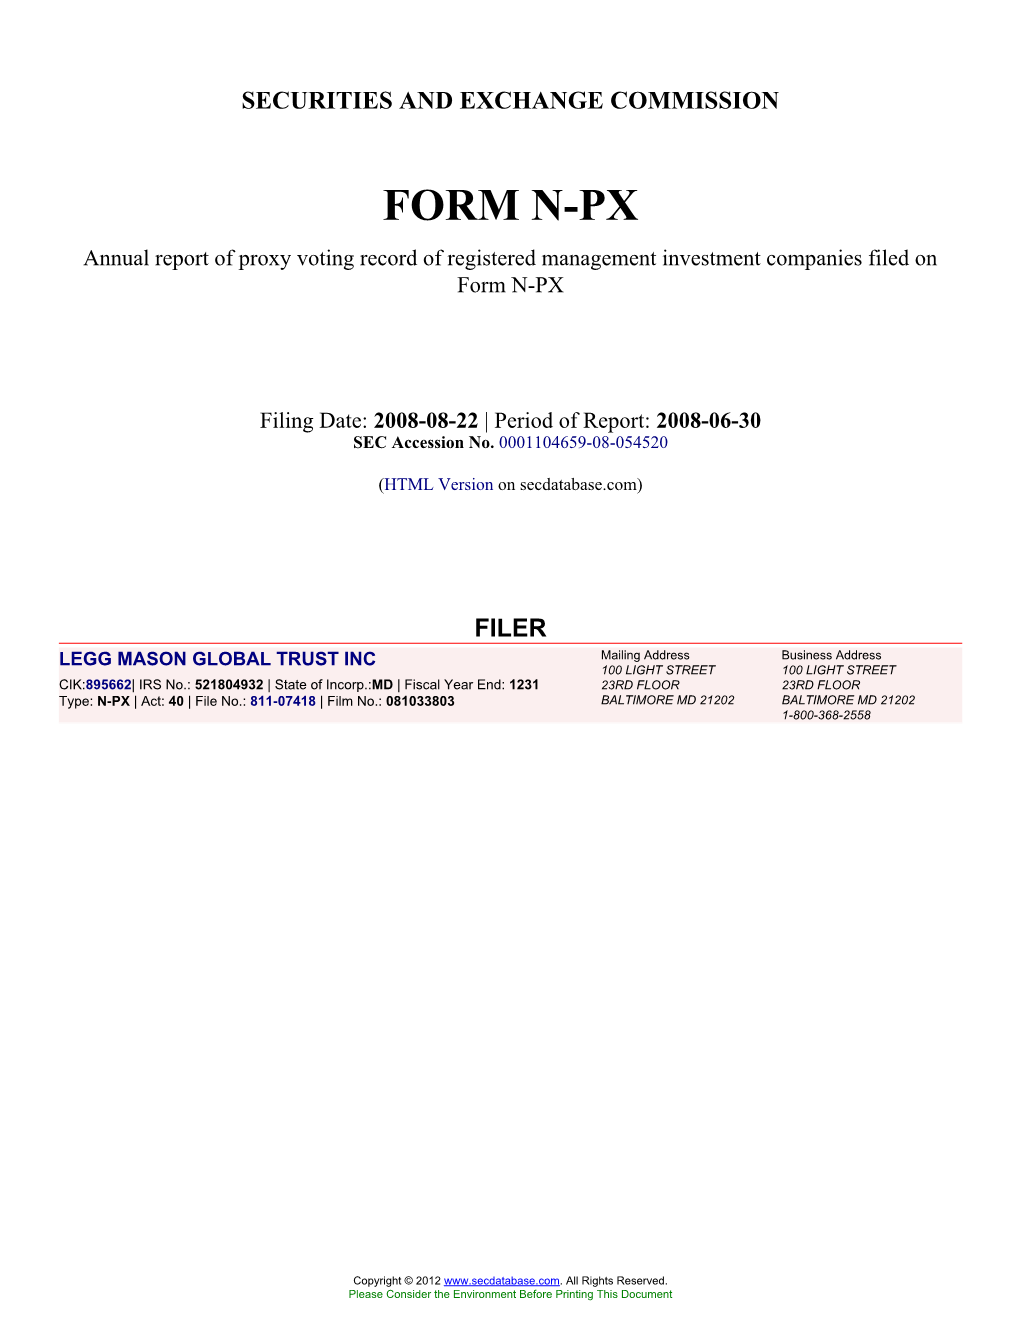 LEGG MASON GLOBAL TRUST INC (Form: N-PX, Filing Date: 08/22/2008)